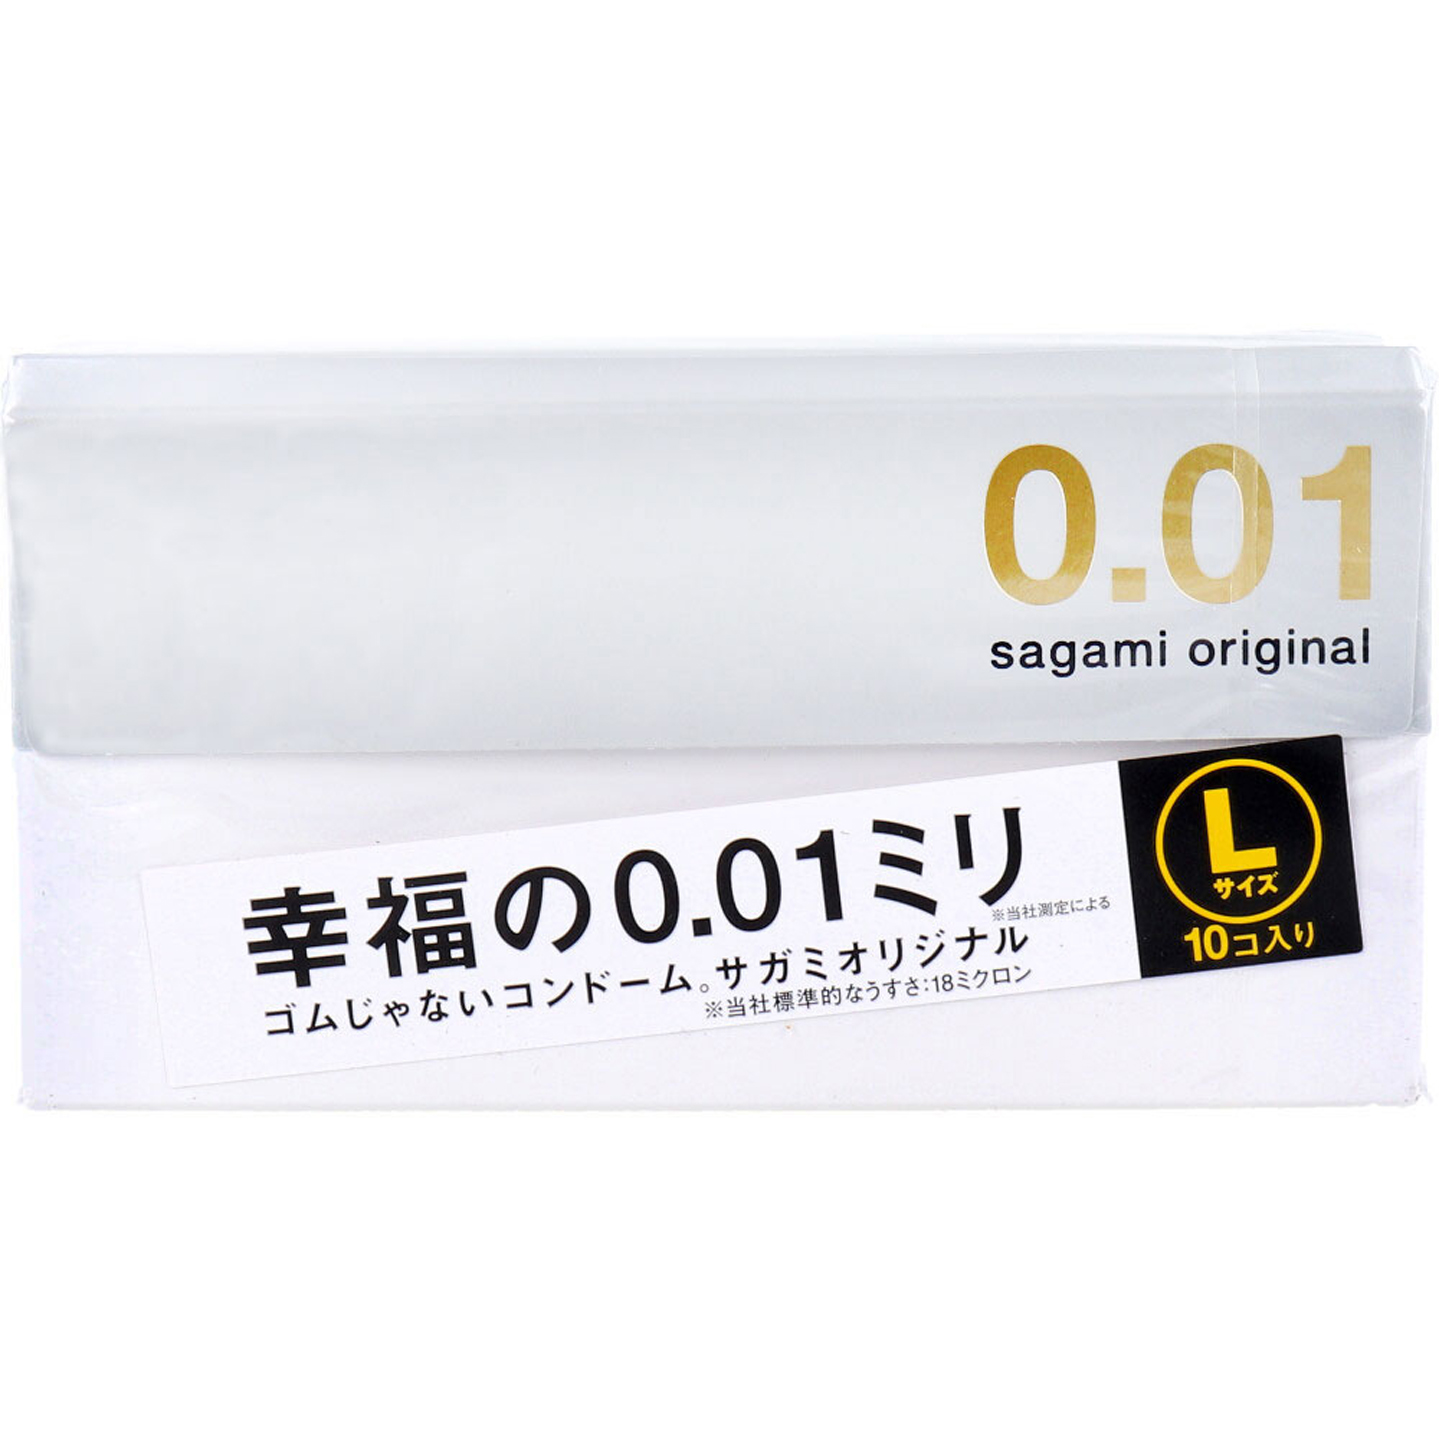 Sagami Original 0.01 Large Szie